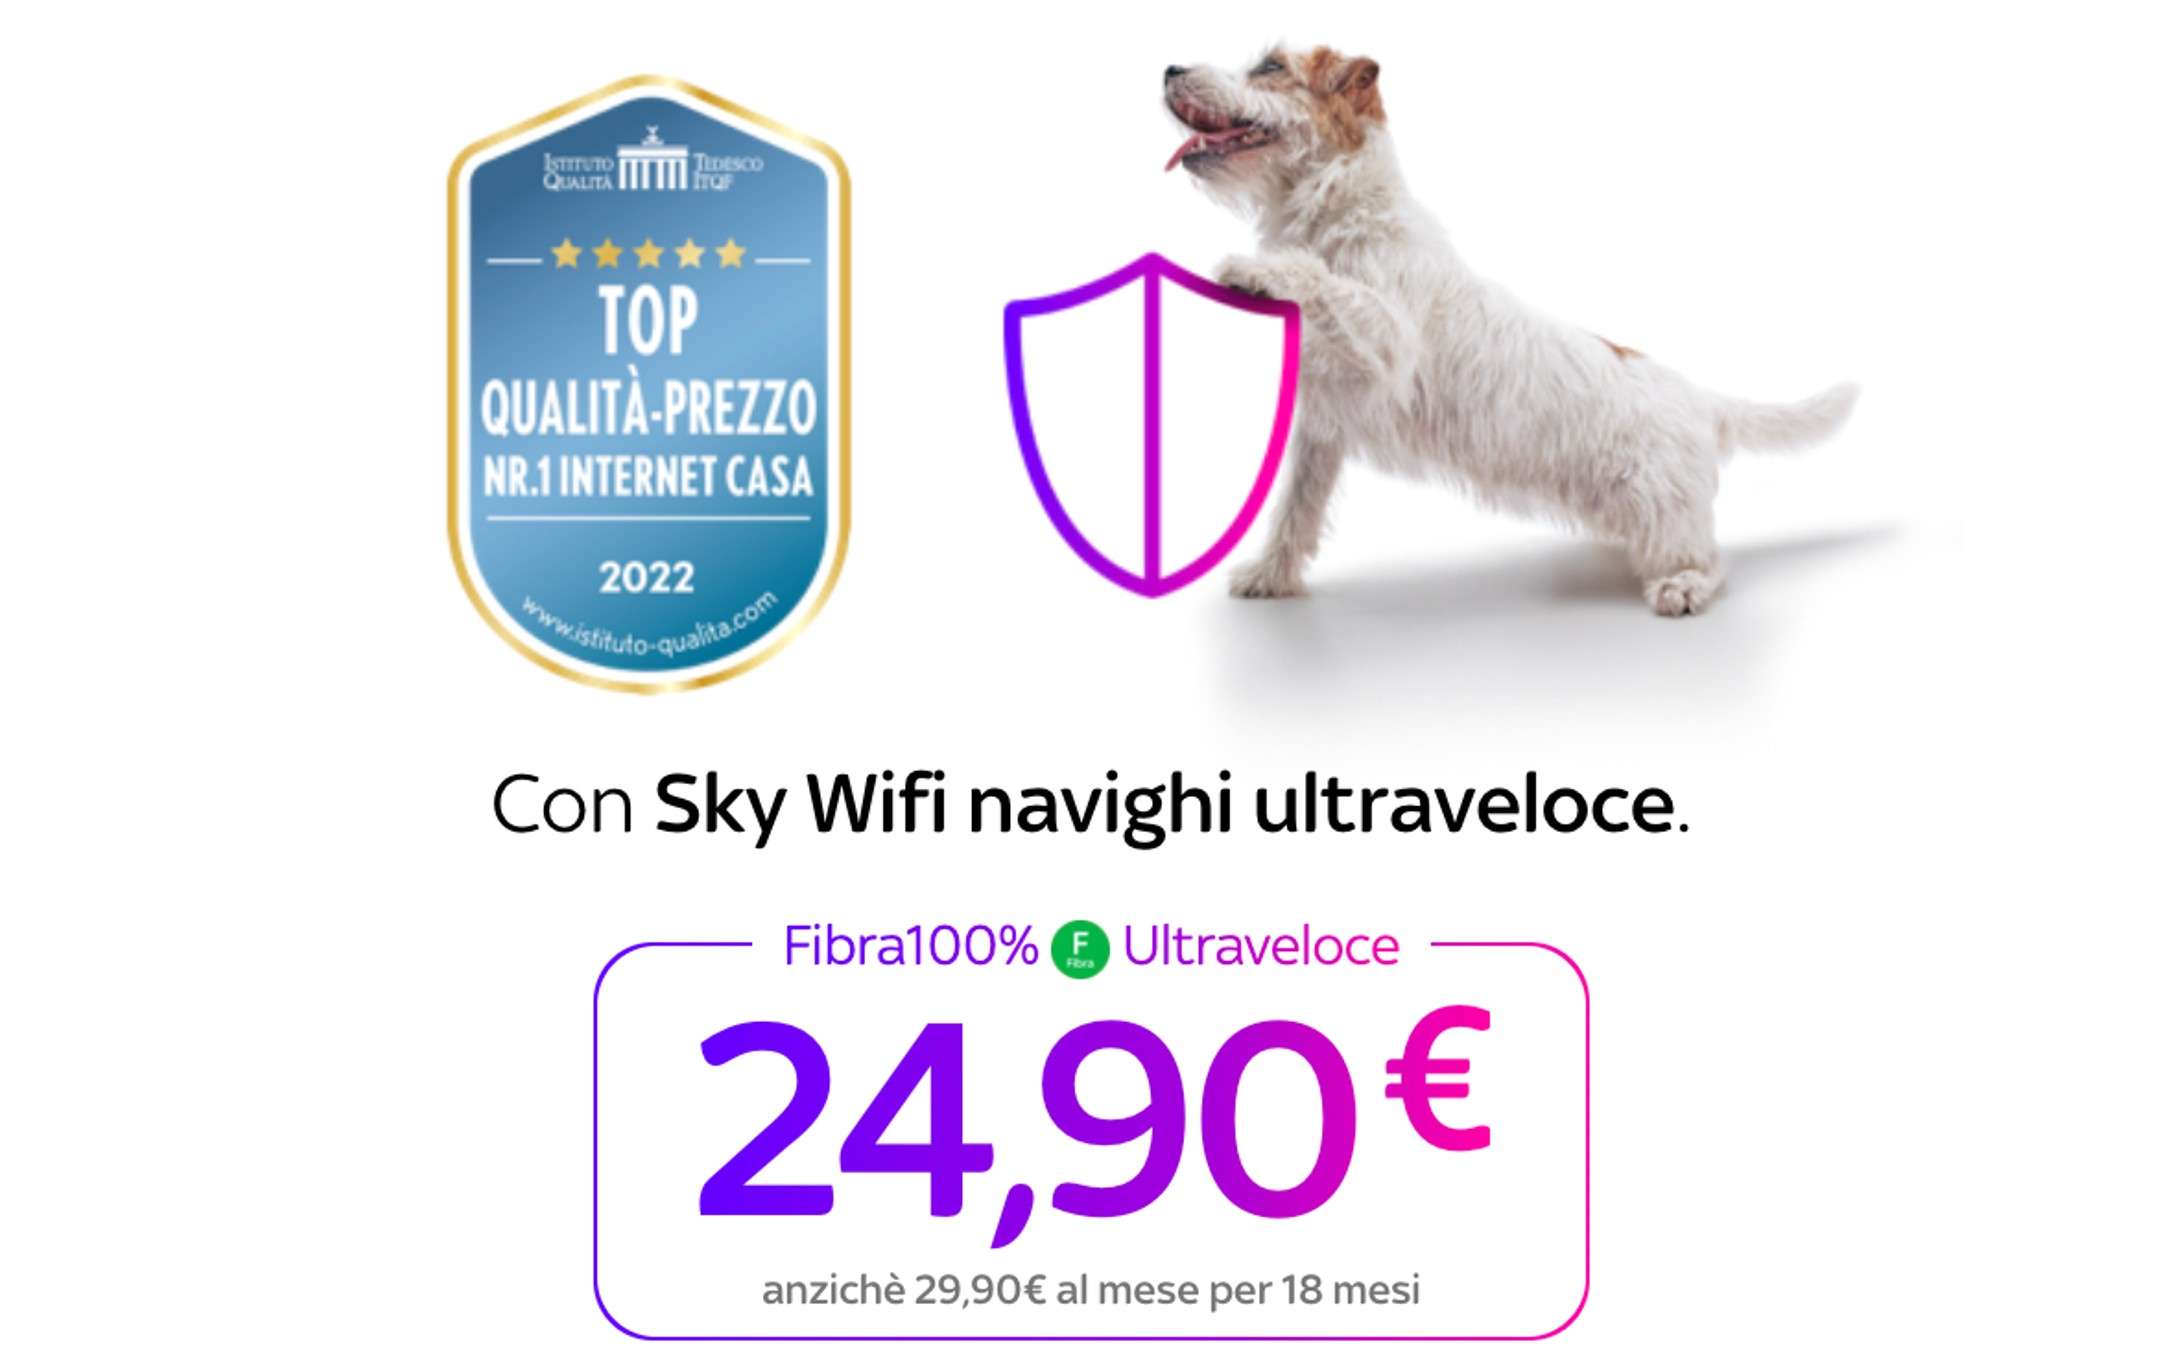 Sky WiFi: Promo Fibra a soli 24,90€ al mese